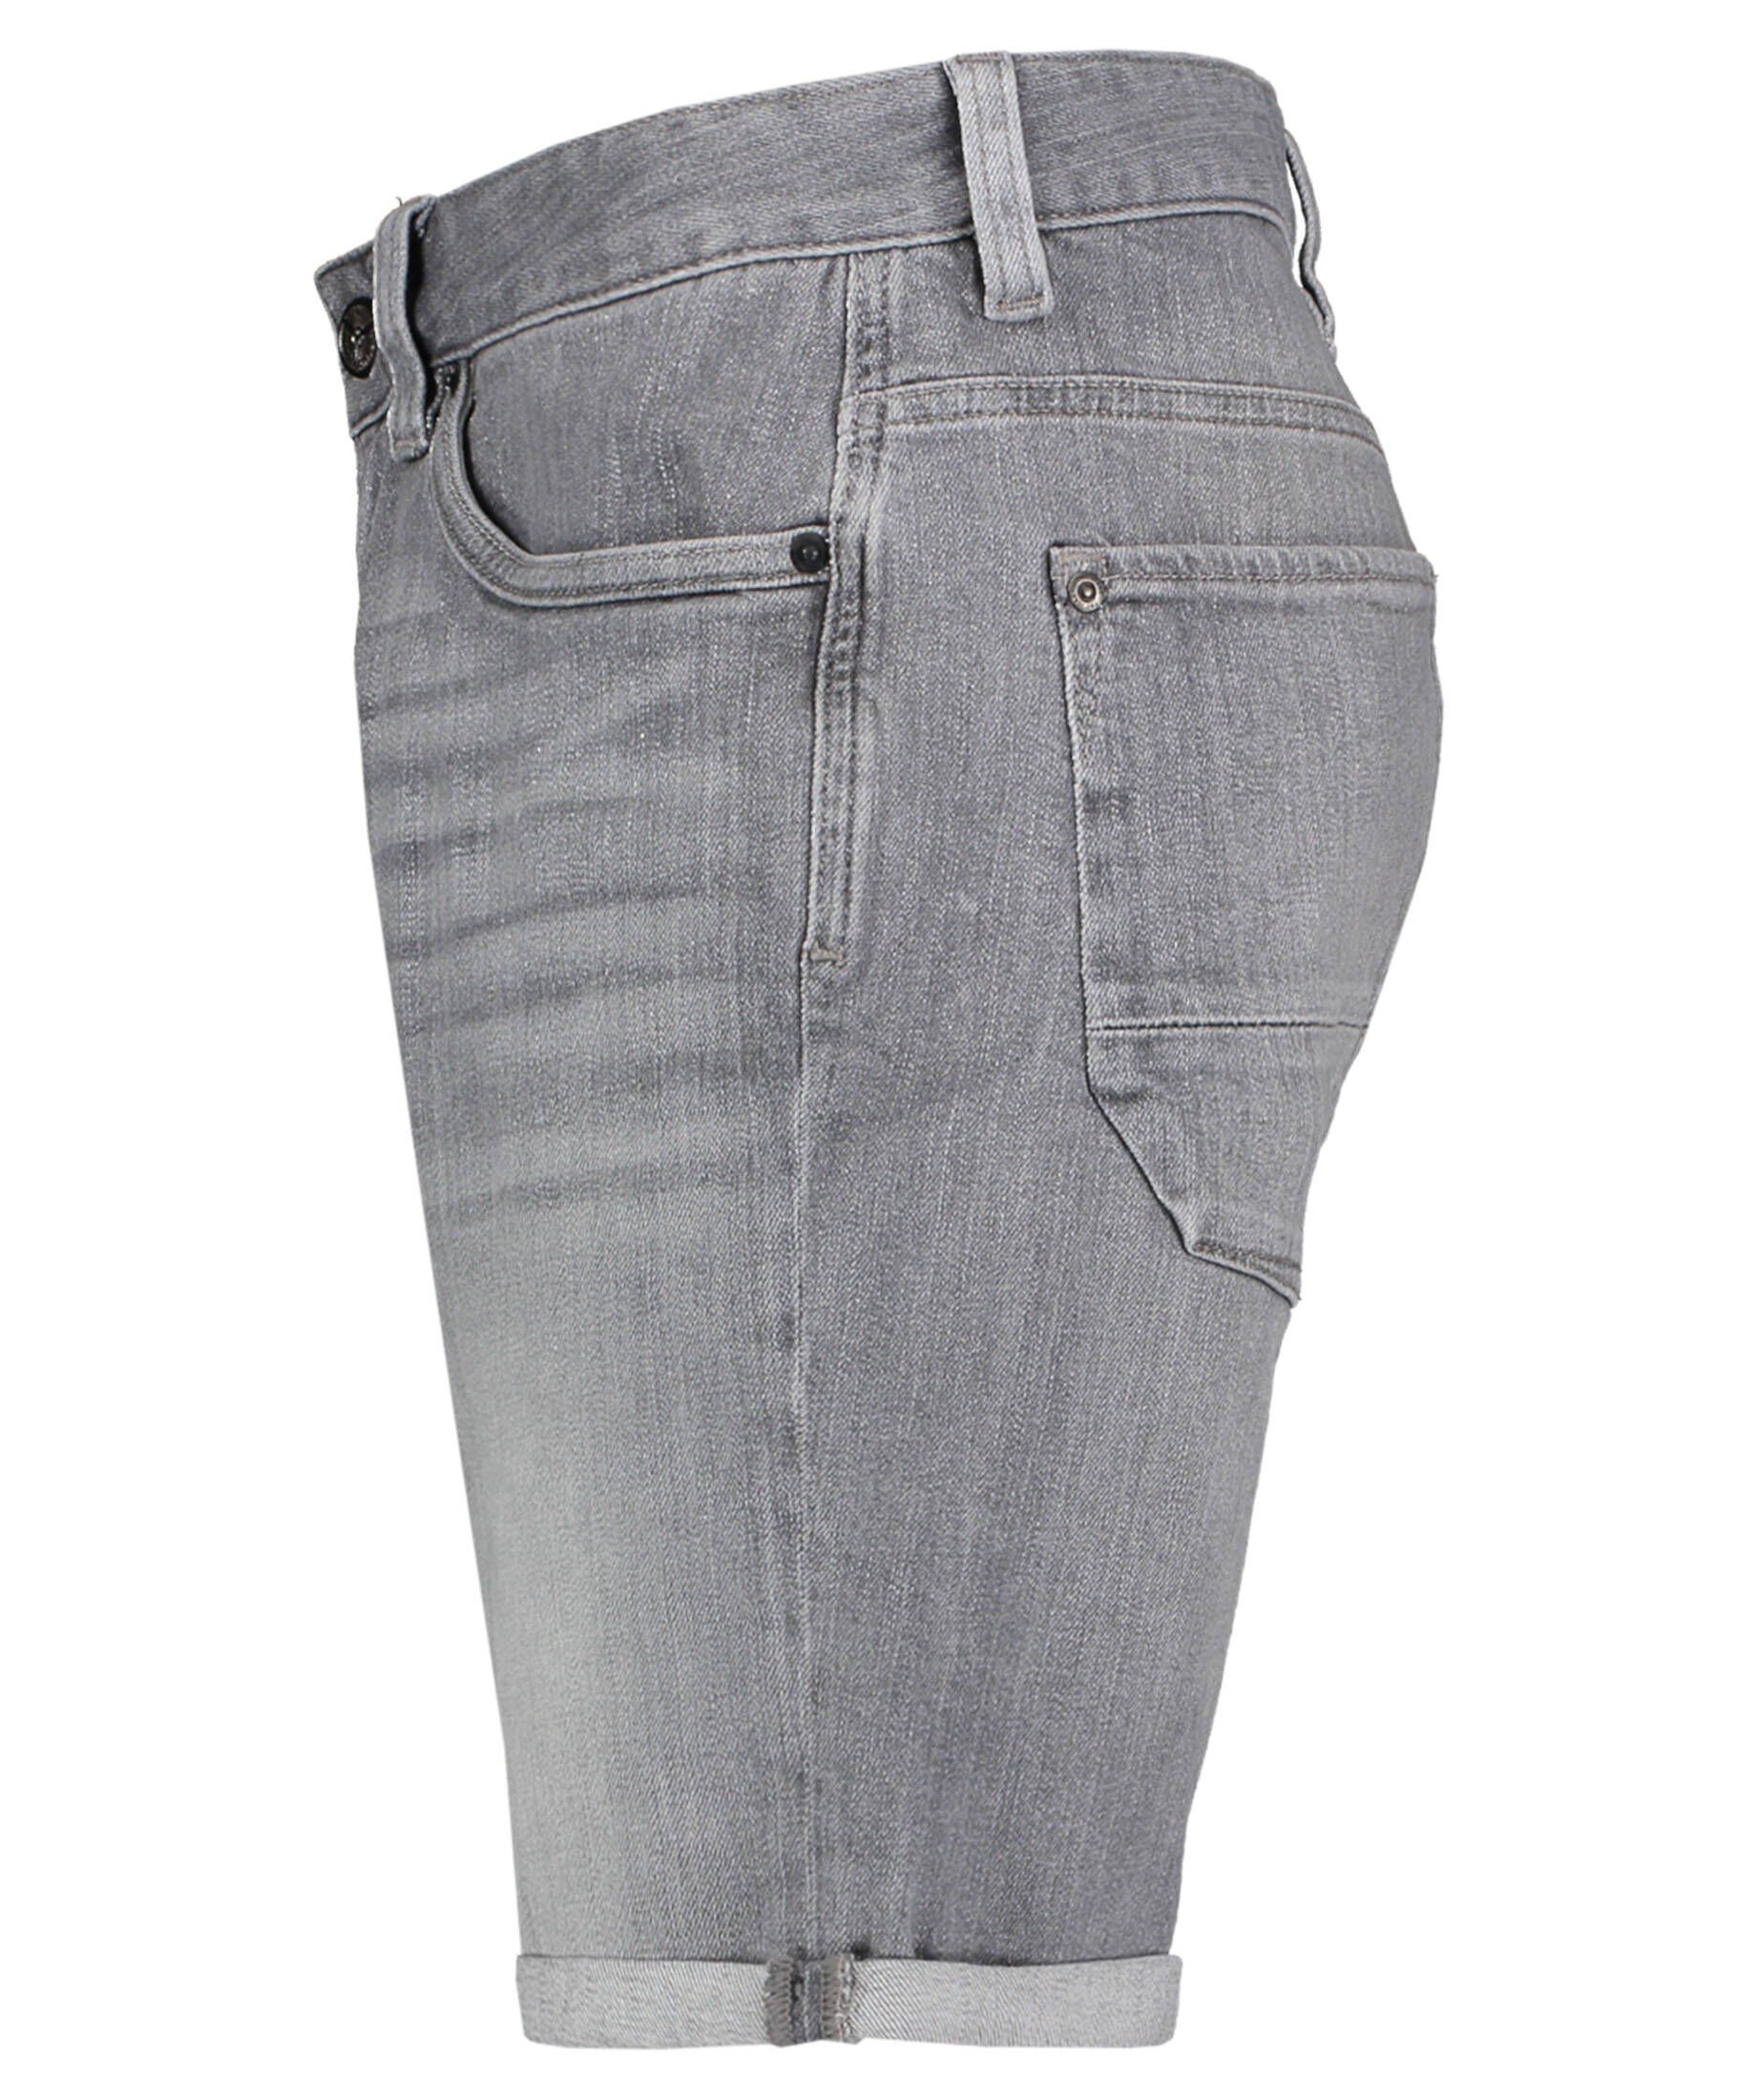 PME LEGEND Regular Jeansshorts silber Jeanshorts NIGHTFLIGHT Herren (12) Fit